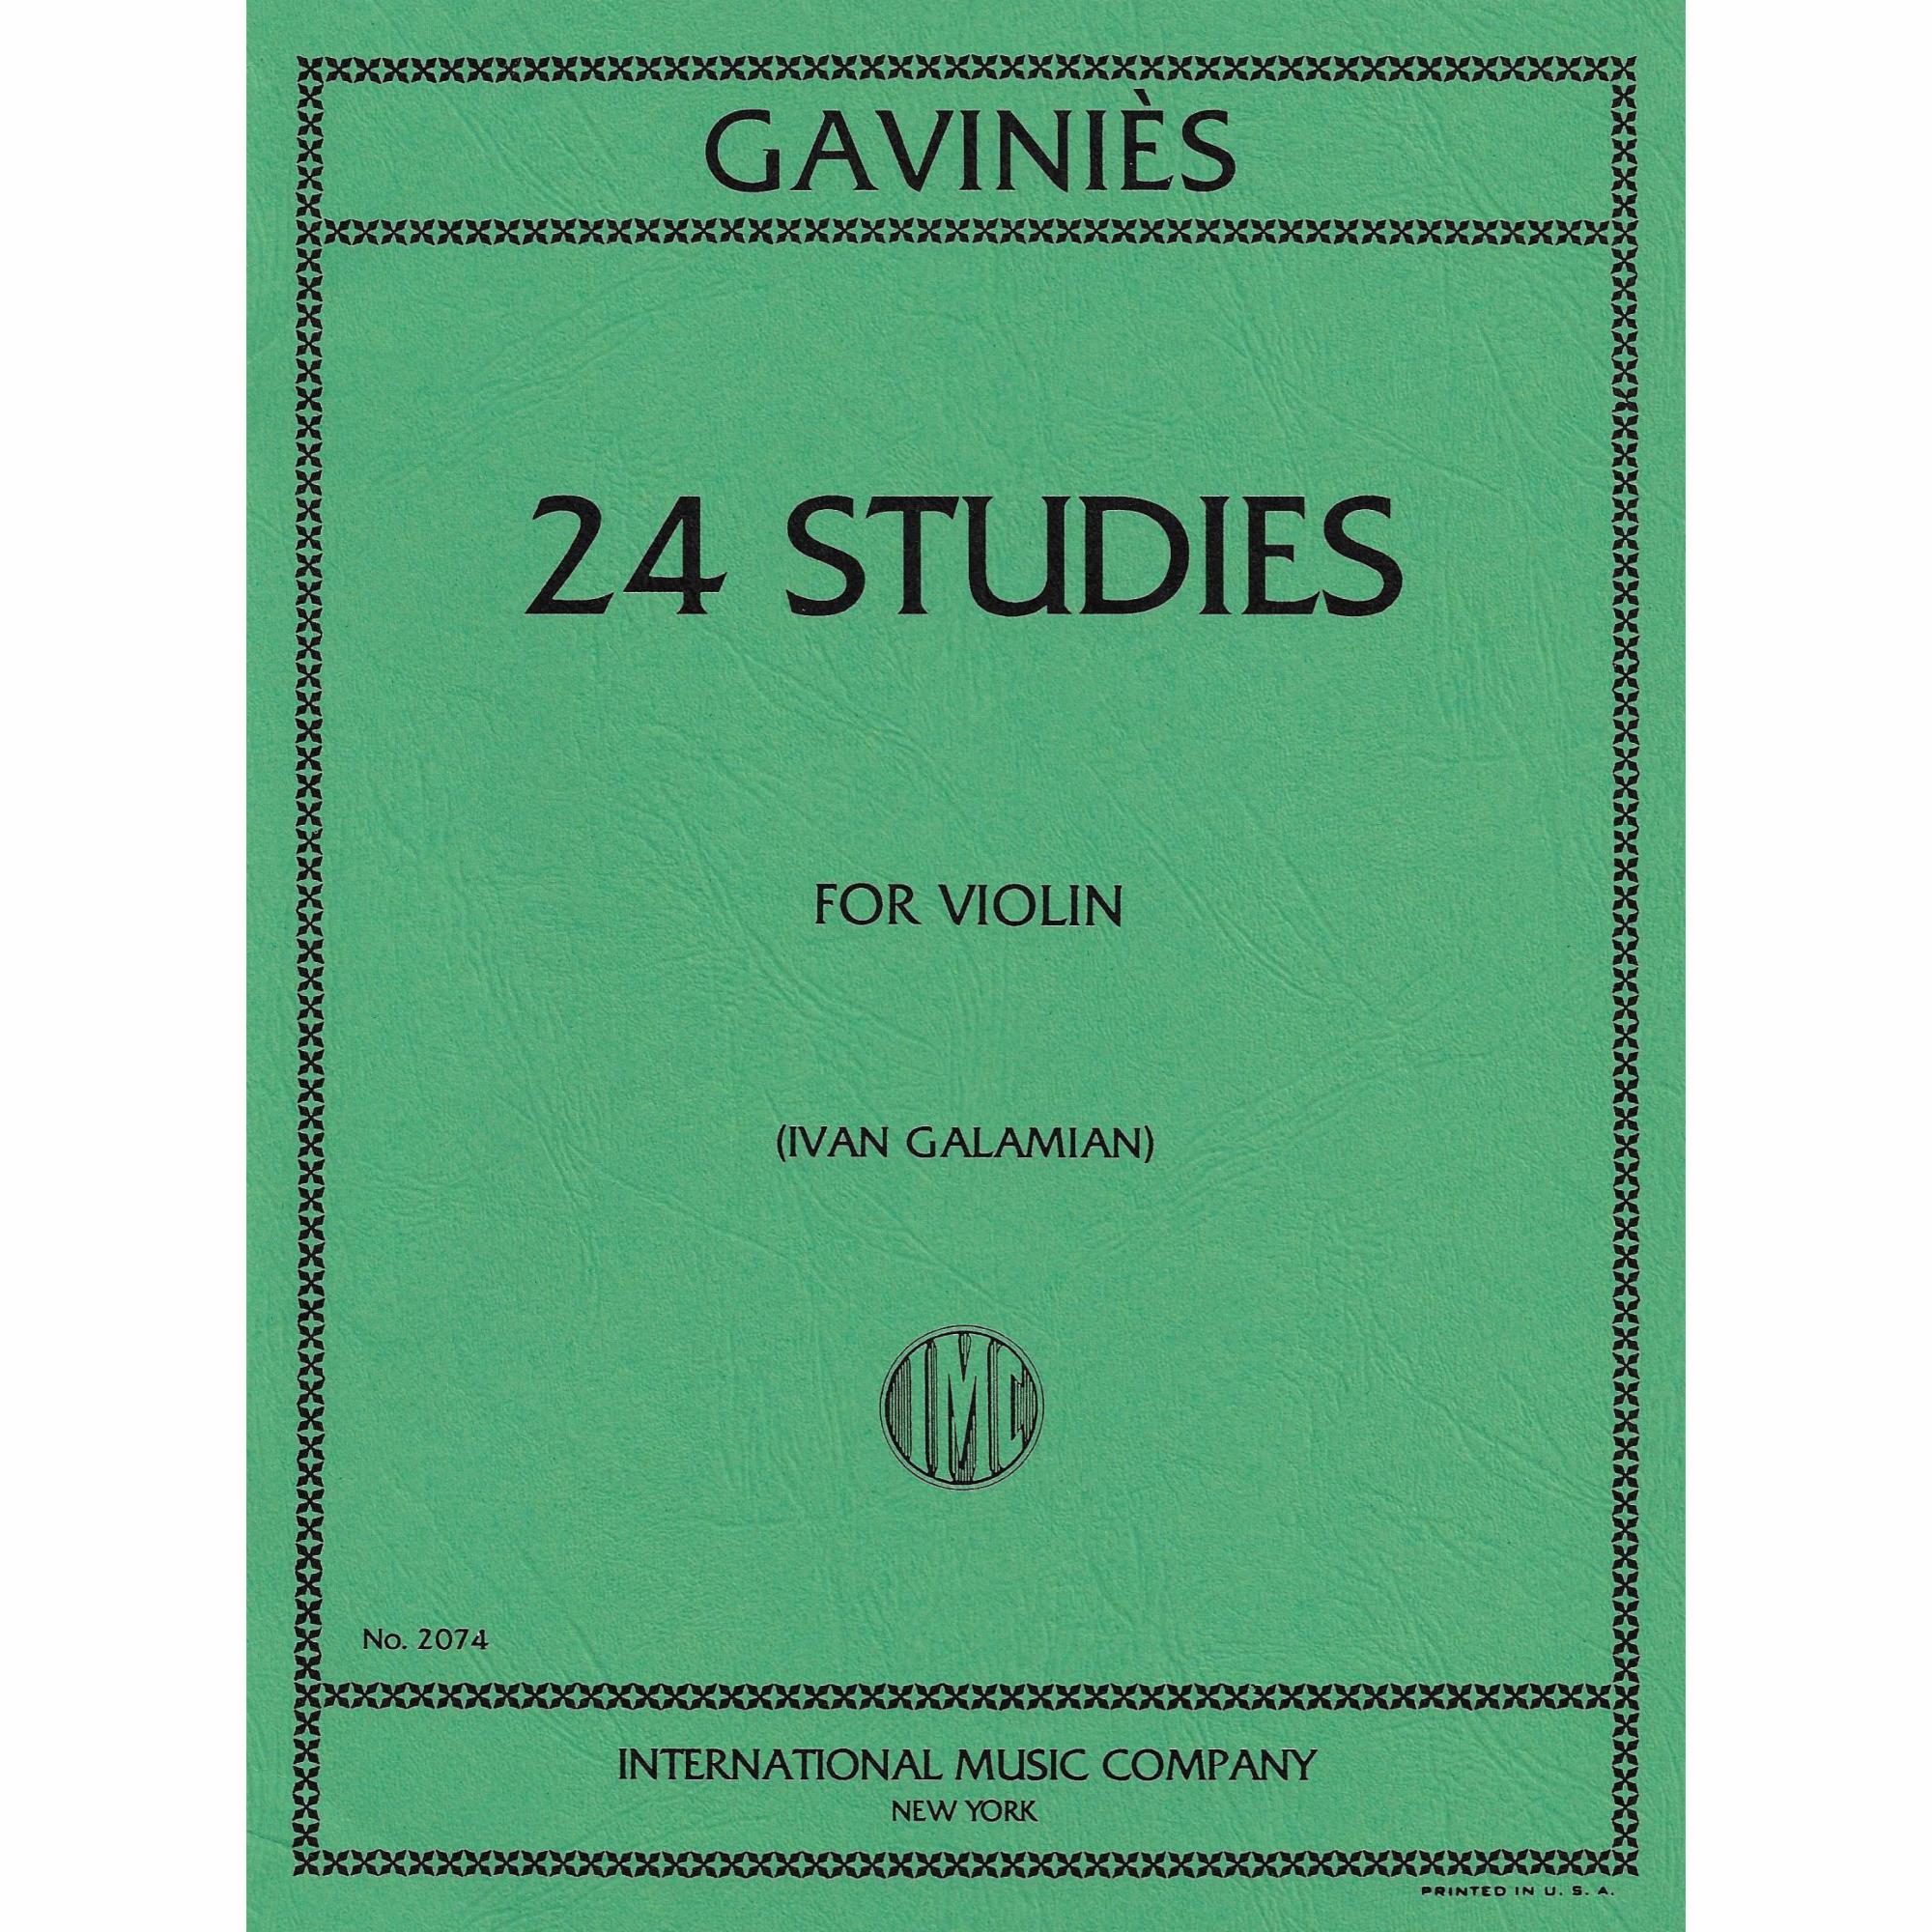 24 Studies for Violin